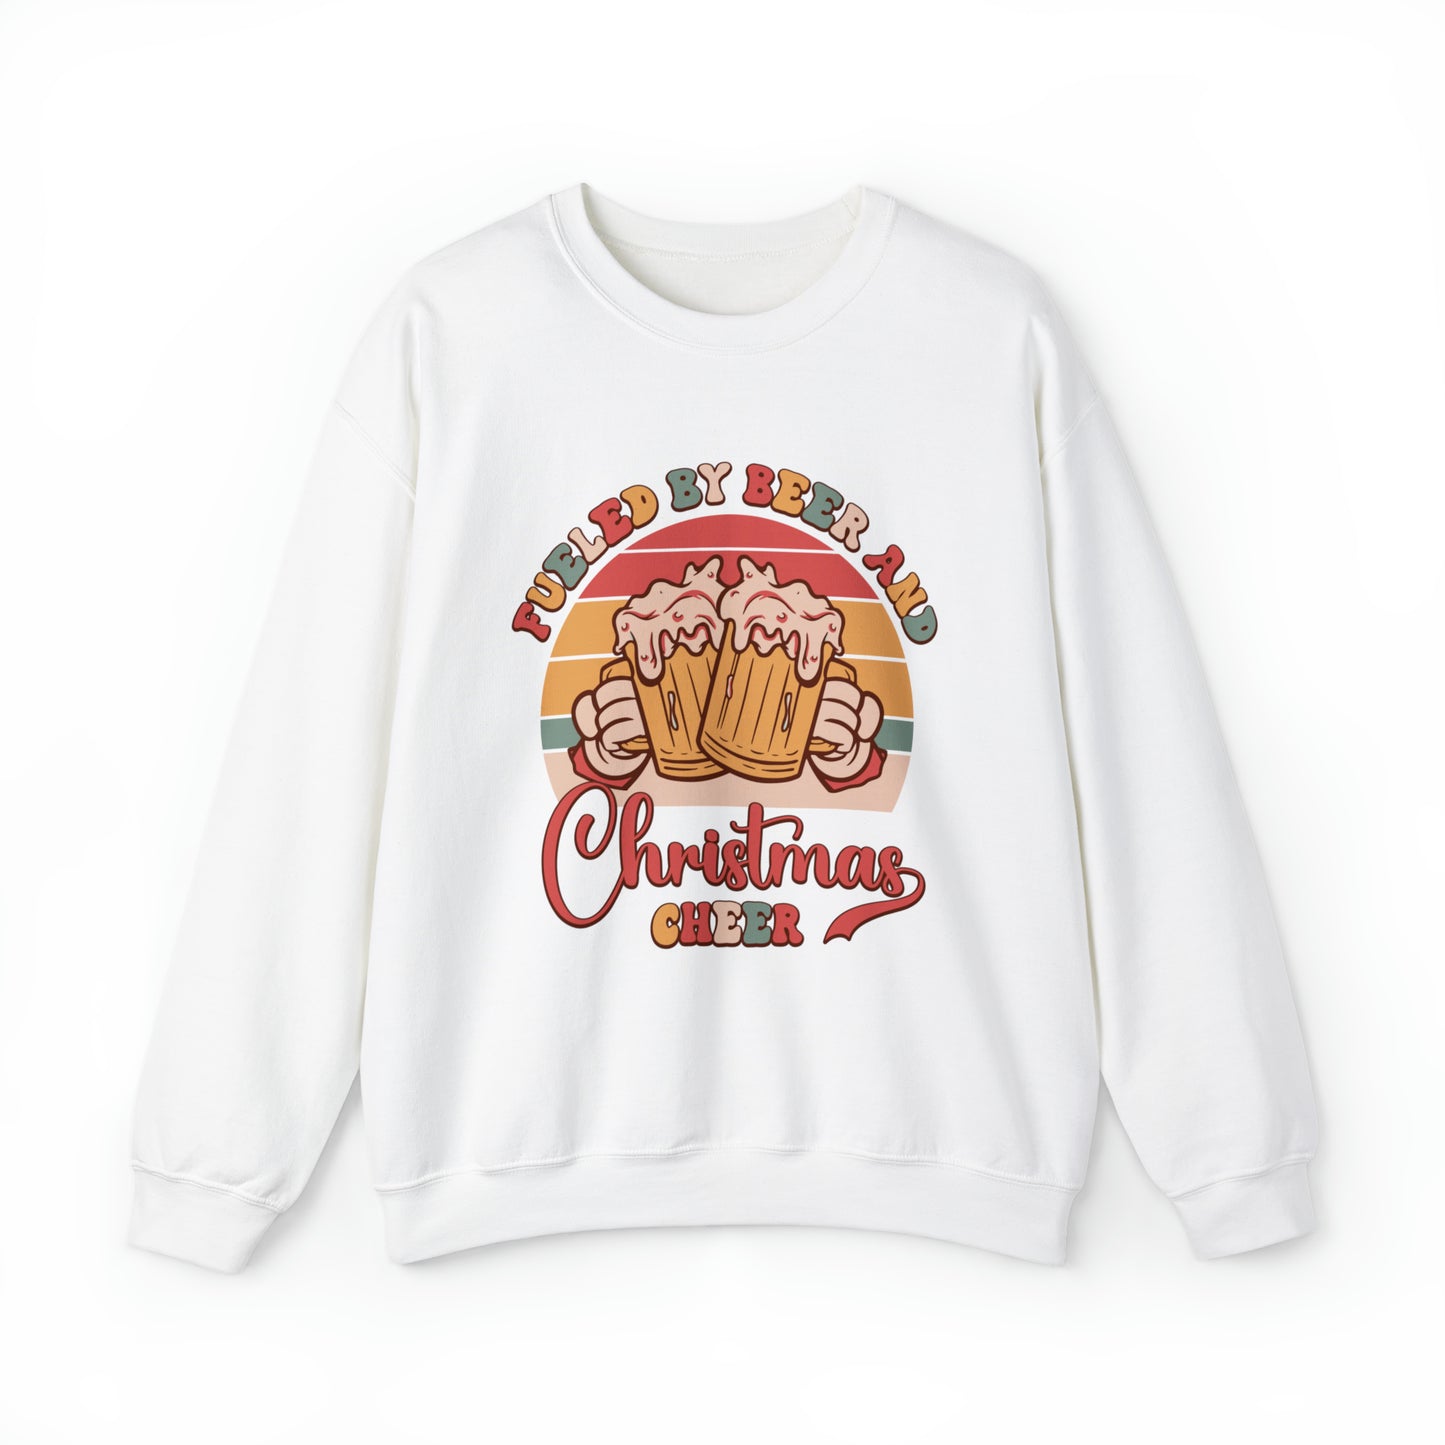 Fueled by Beer and Christmas Cheer Adult Unisex Funny Christmas Crewneck Sweatshirt